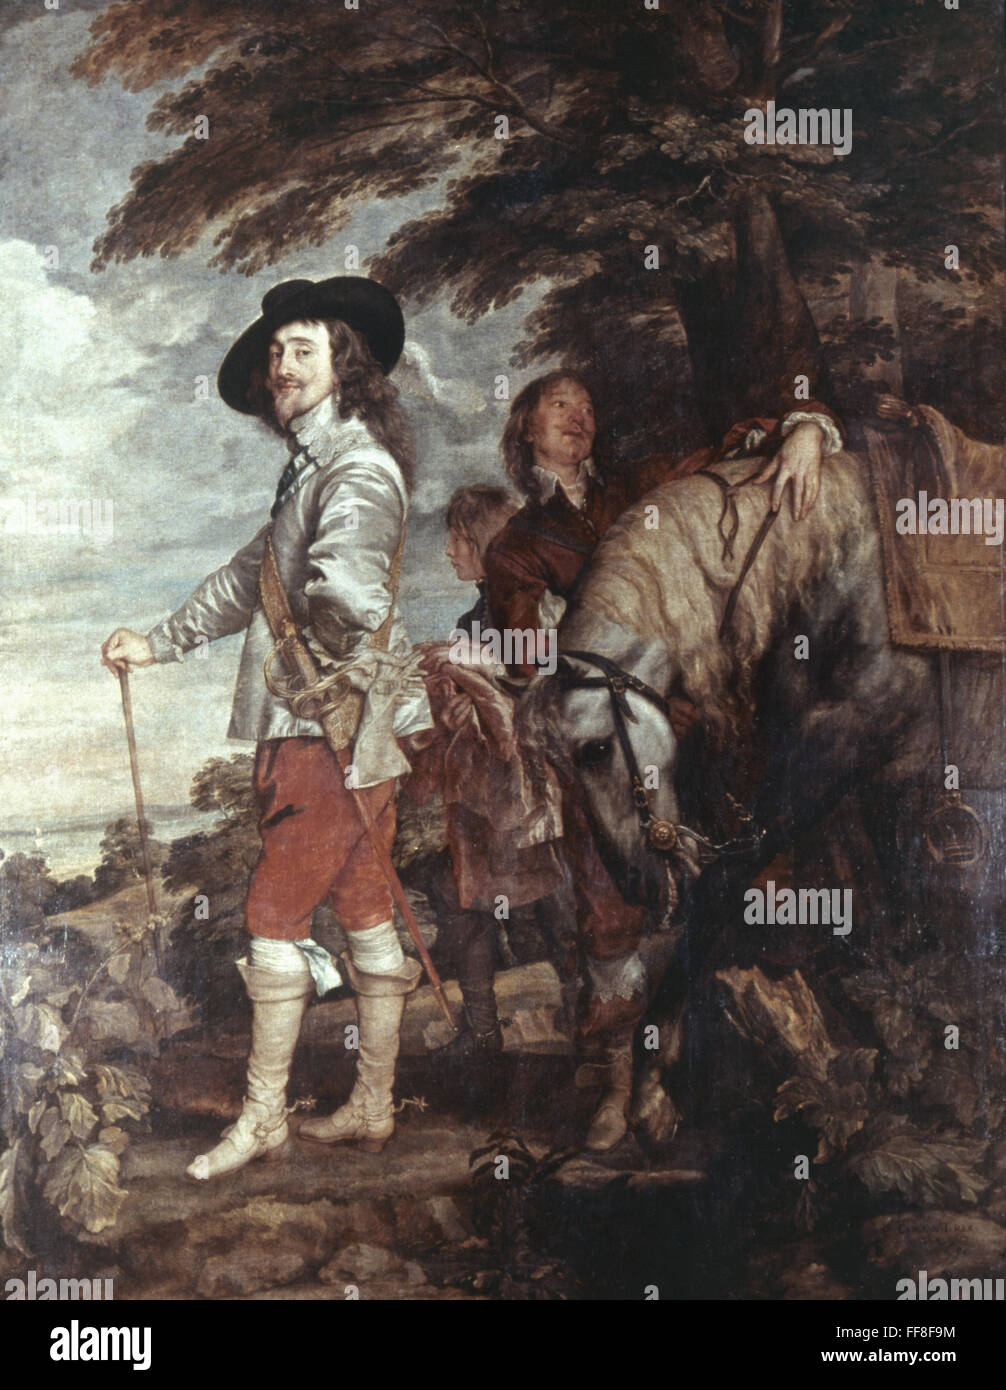 Carlos I de Inglaterra. /NCharles I de Inglaterra. Óleo sobre lienzo de Sir Anthony van Dyck, 1635. Foto de stock